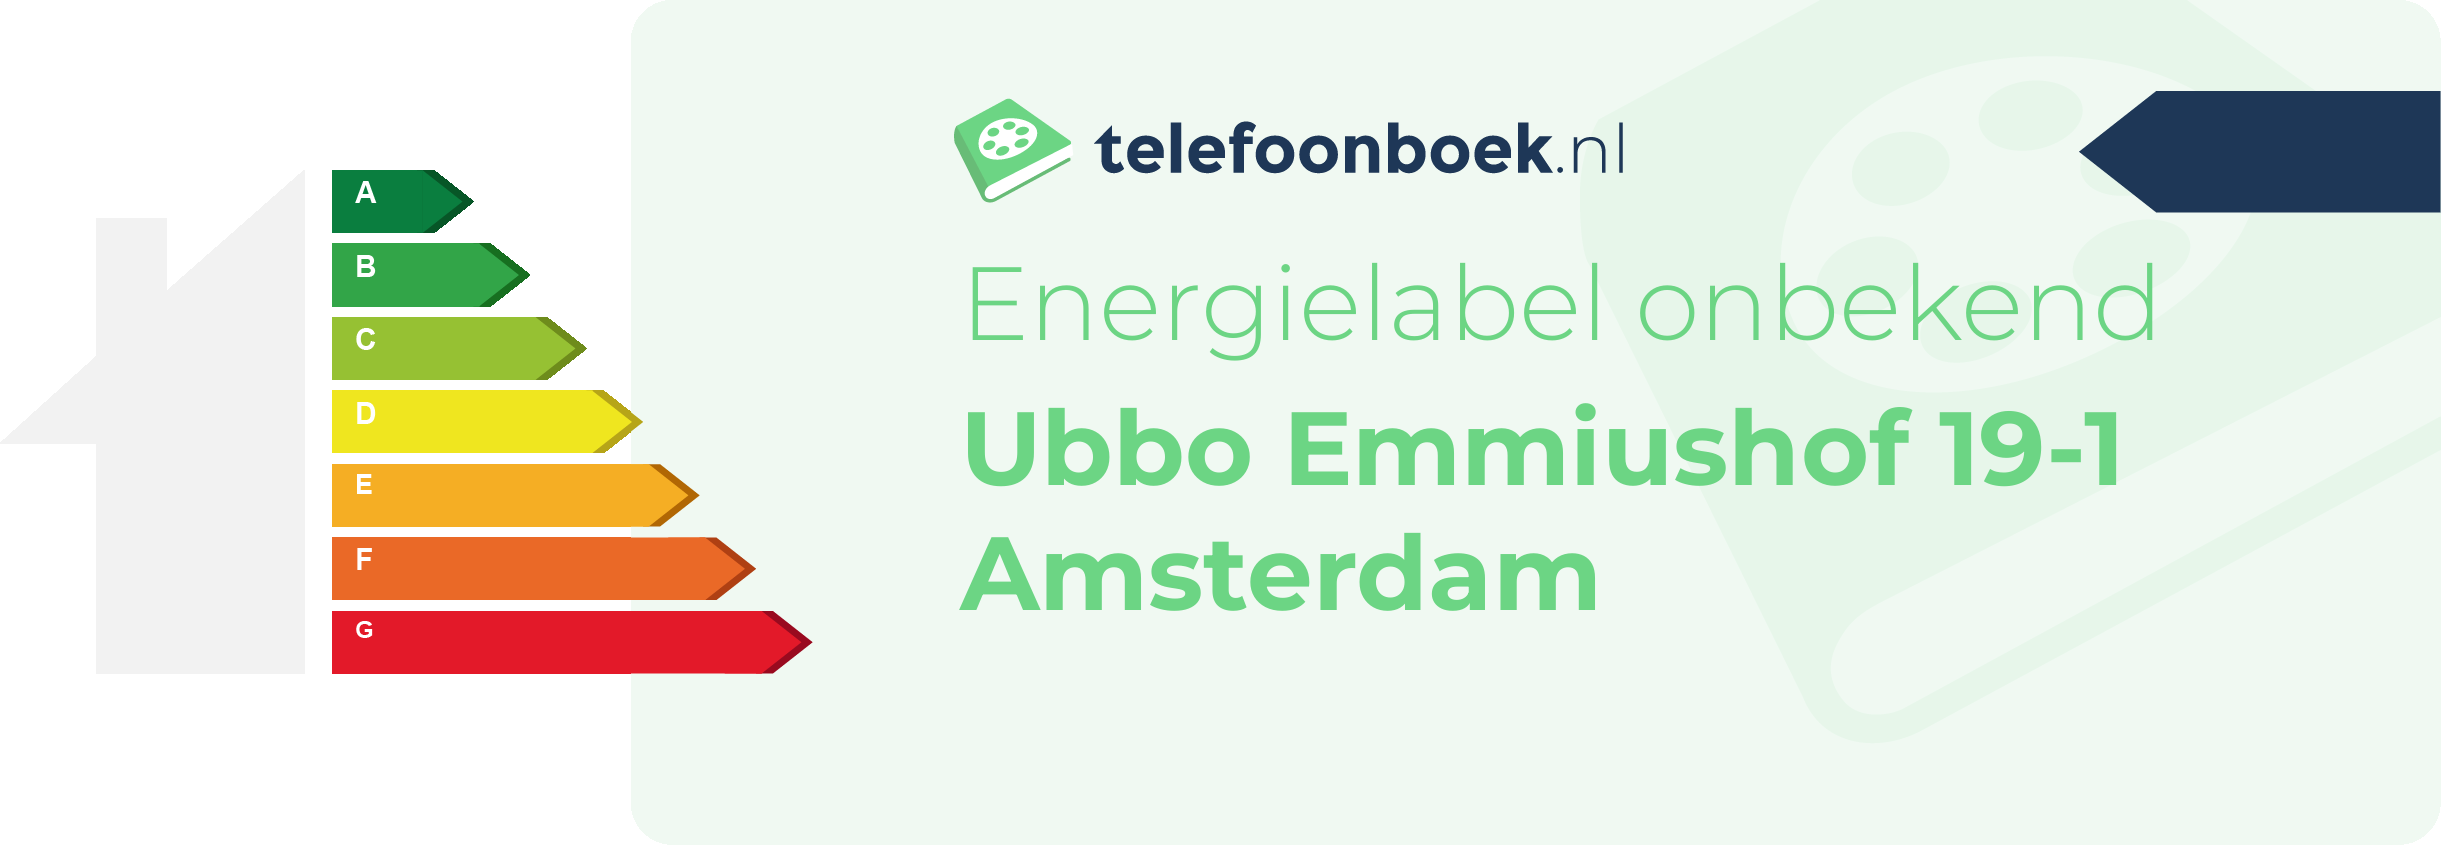 Energielabel Ubbo Emmiushof 19-1 Amsterdam